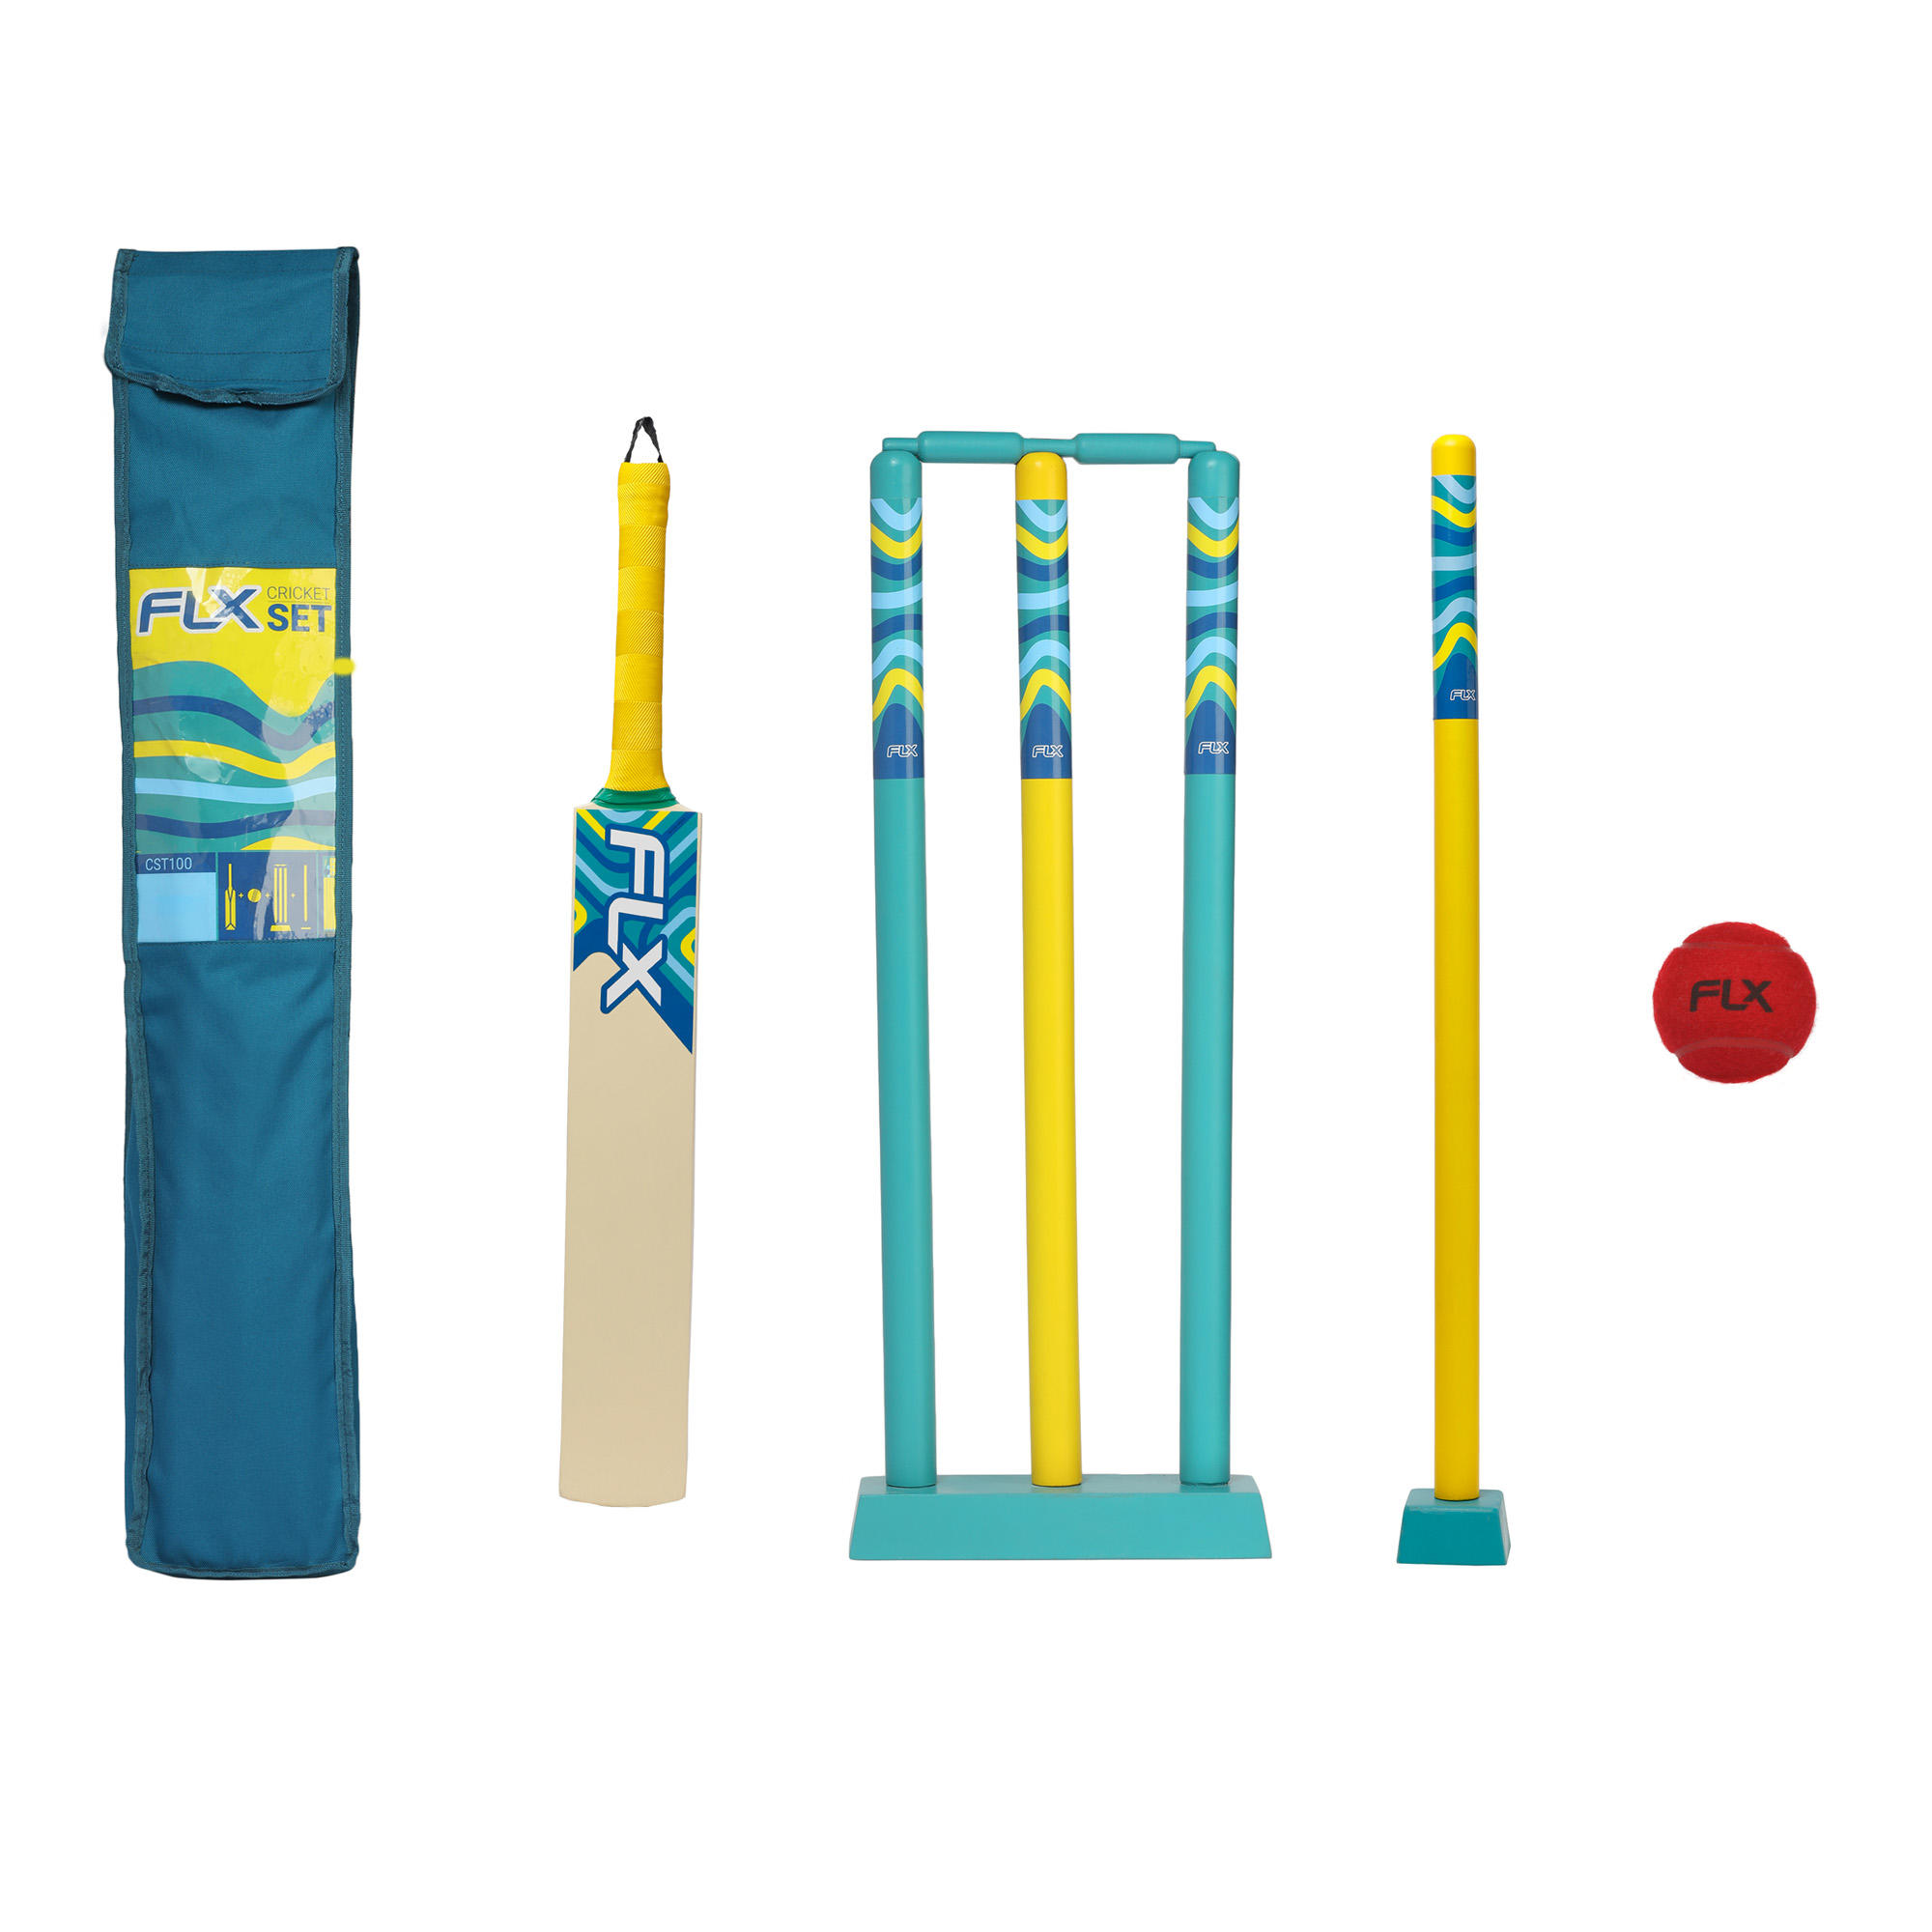 cricket kit price in decathlon